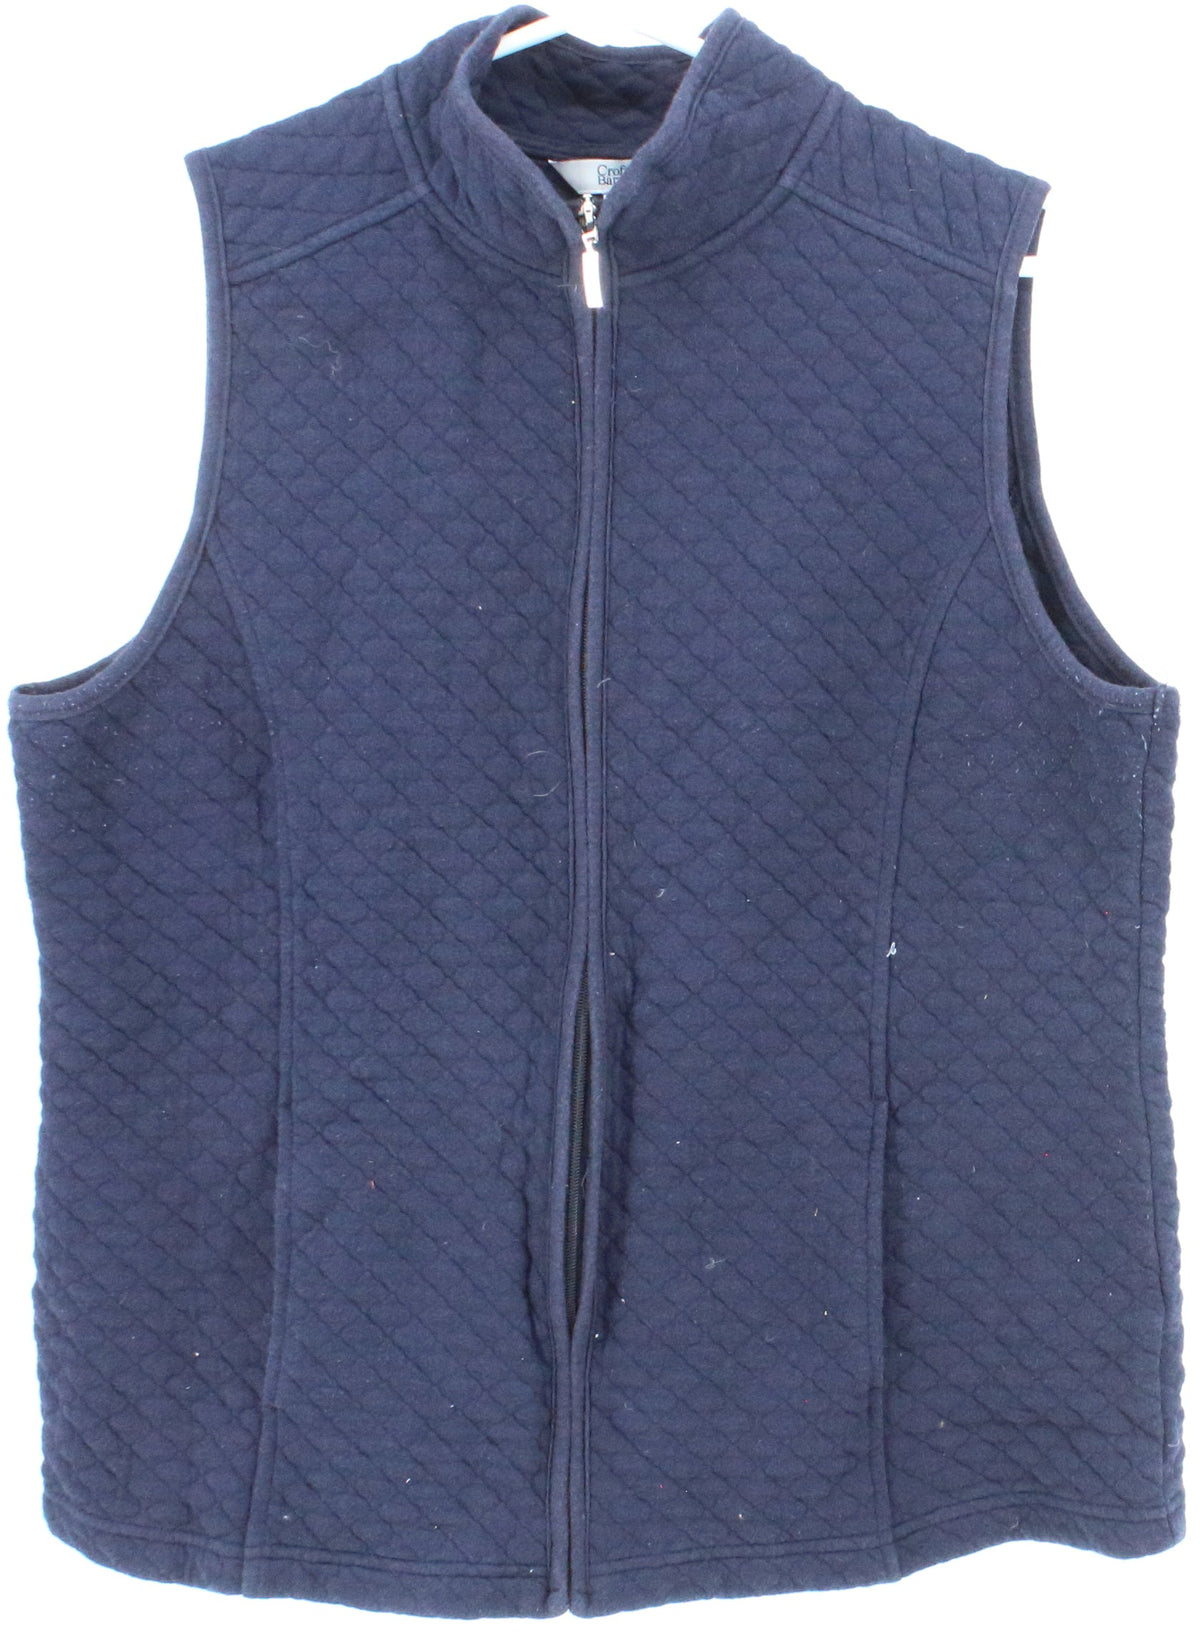 Croft & Barrow Navy Blue Quilt Vest